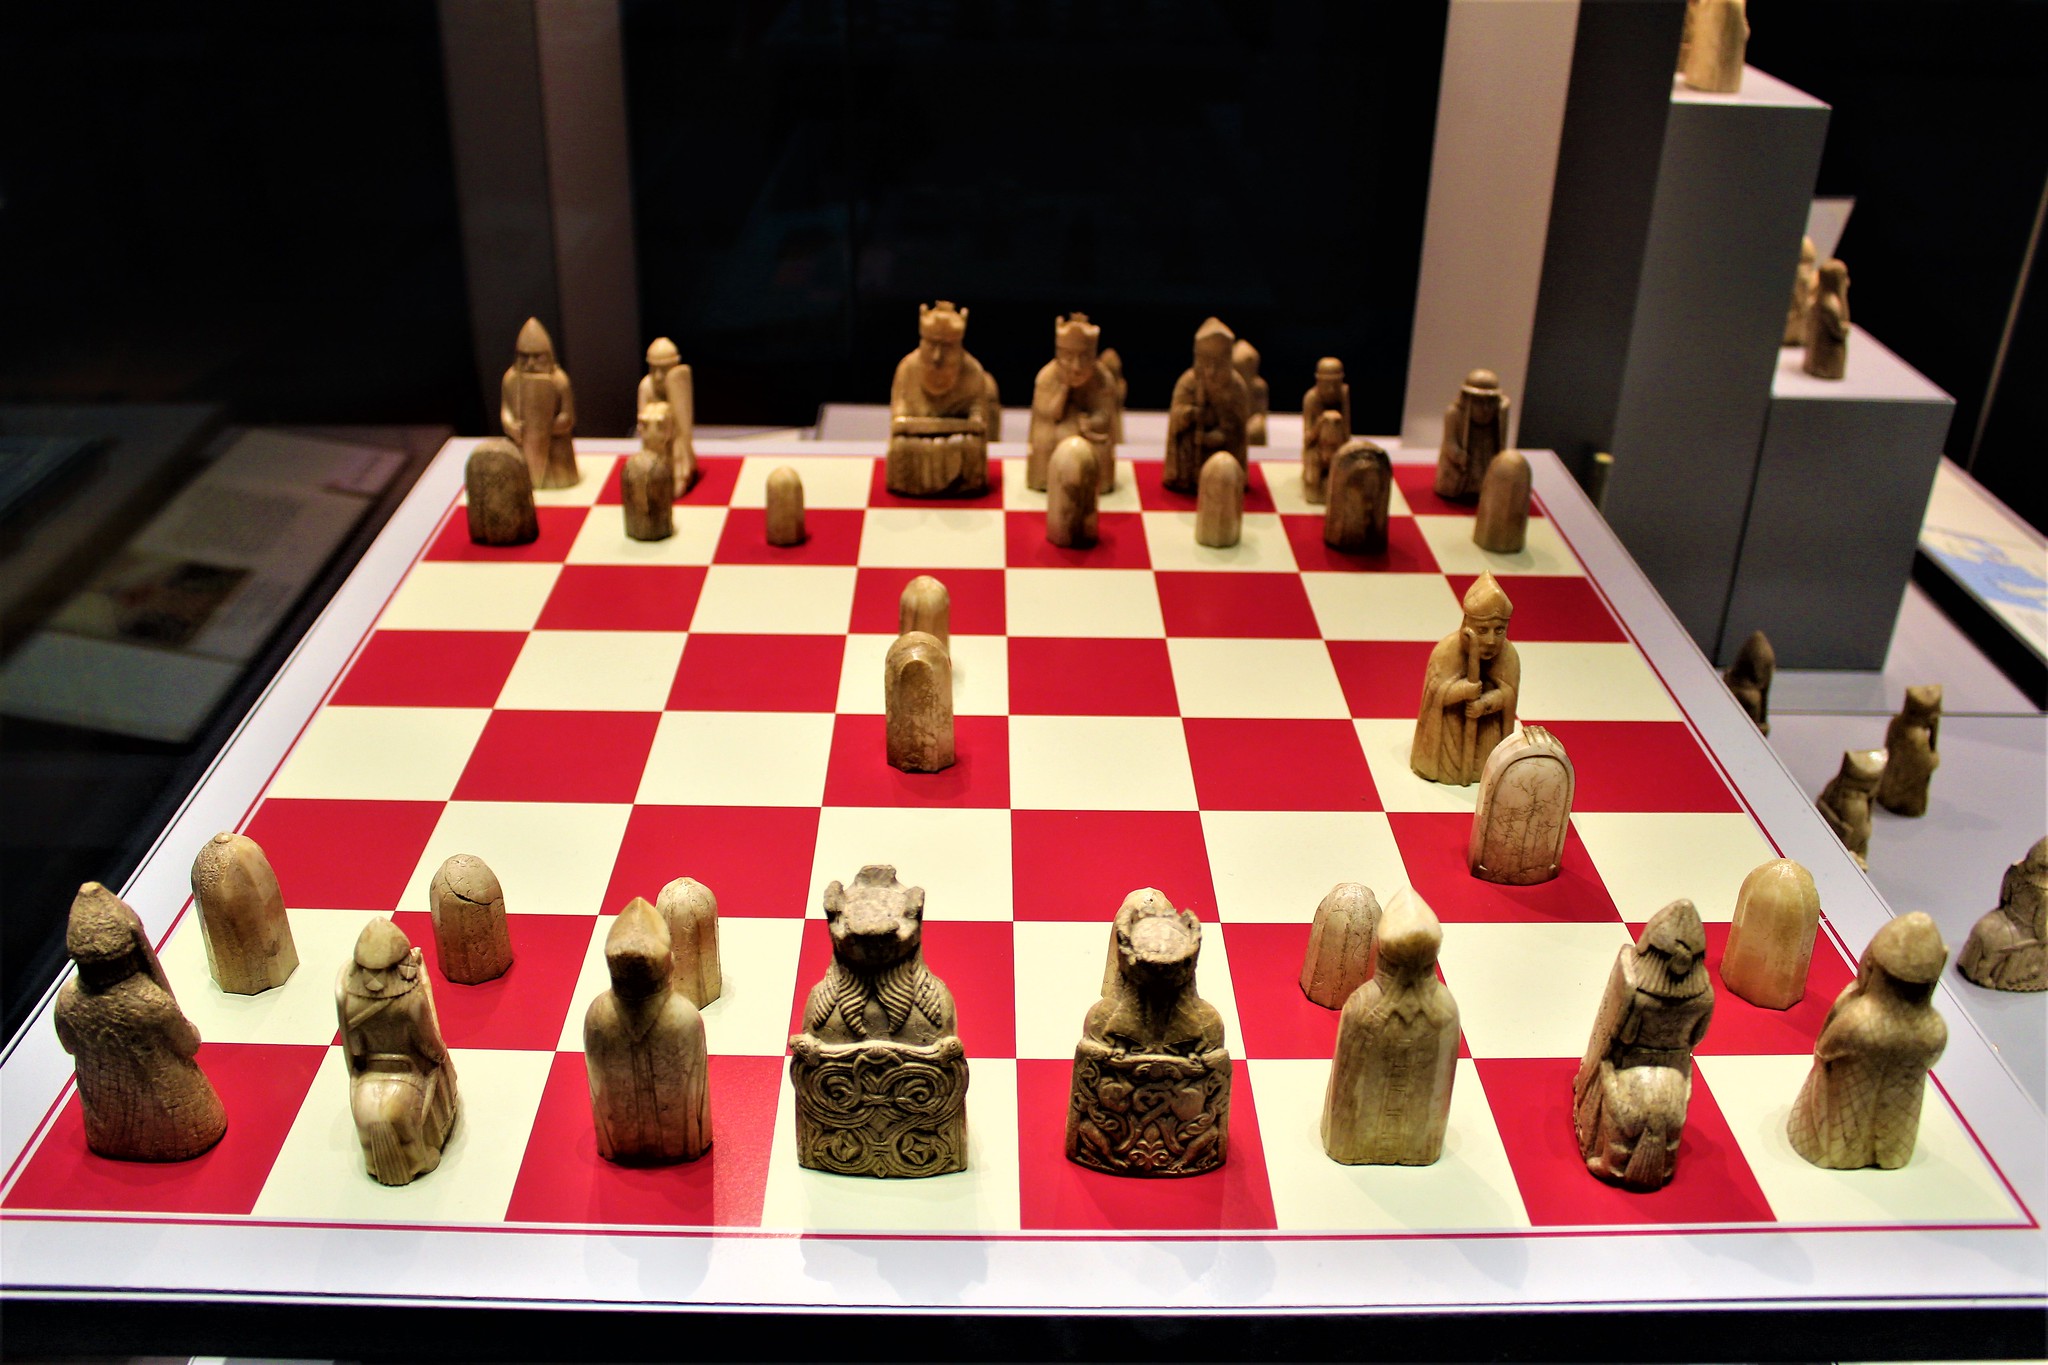 British Museum chess pieces